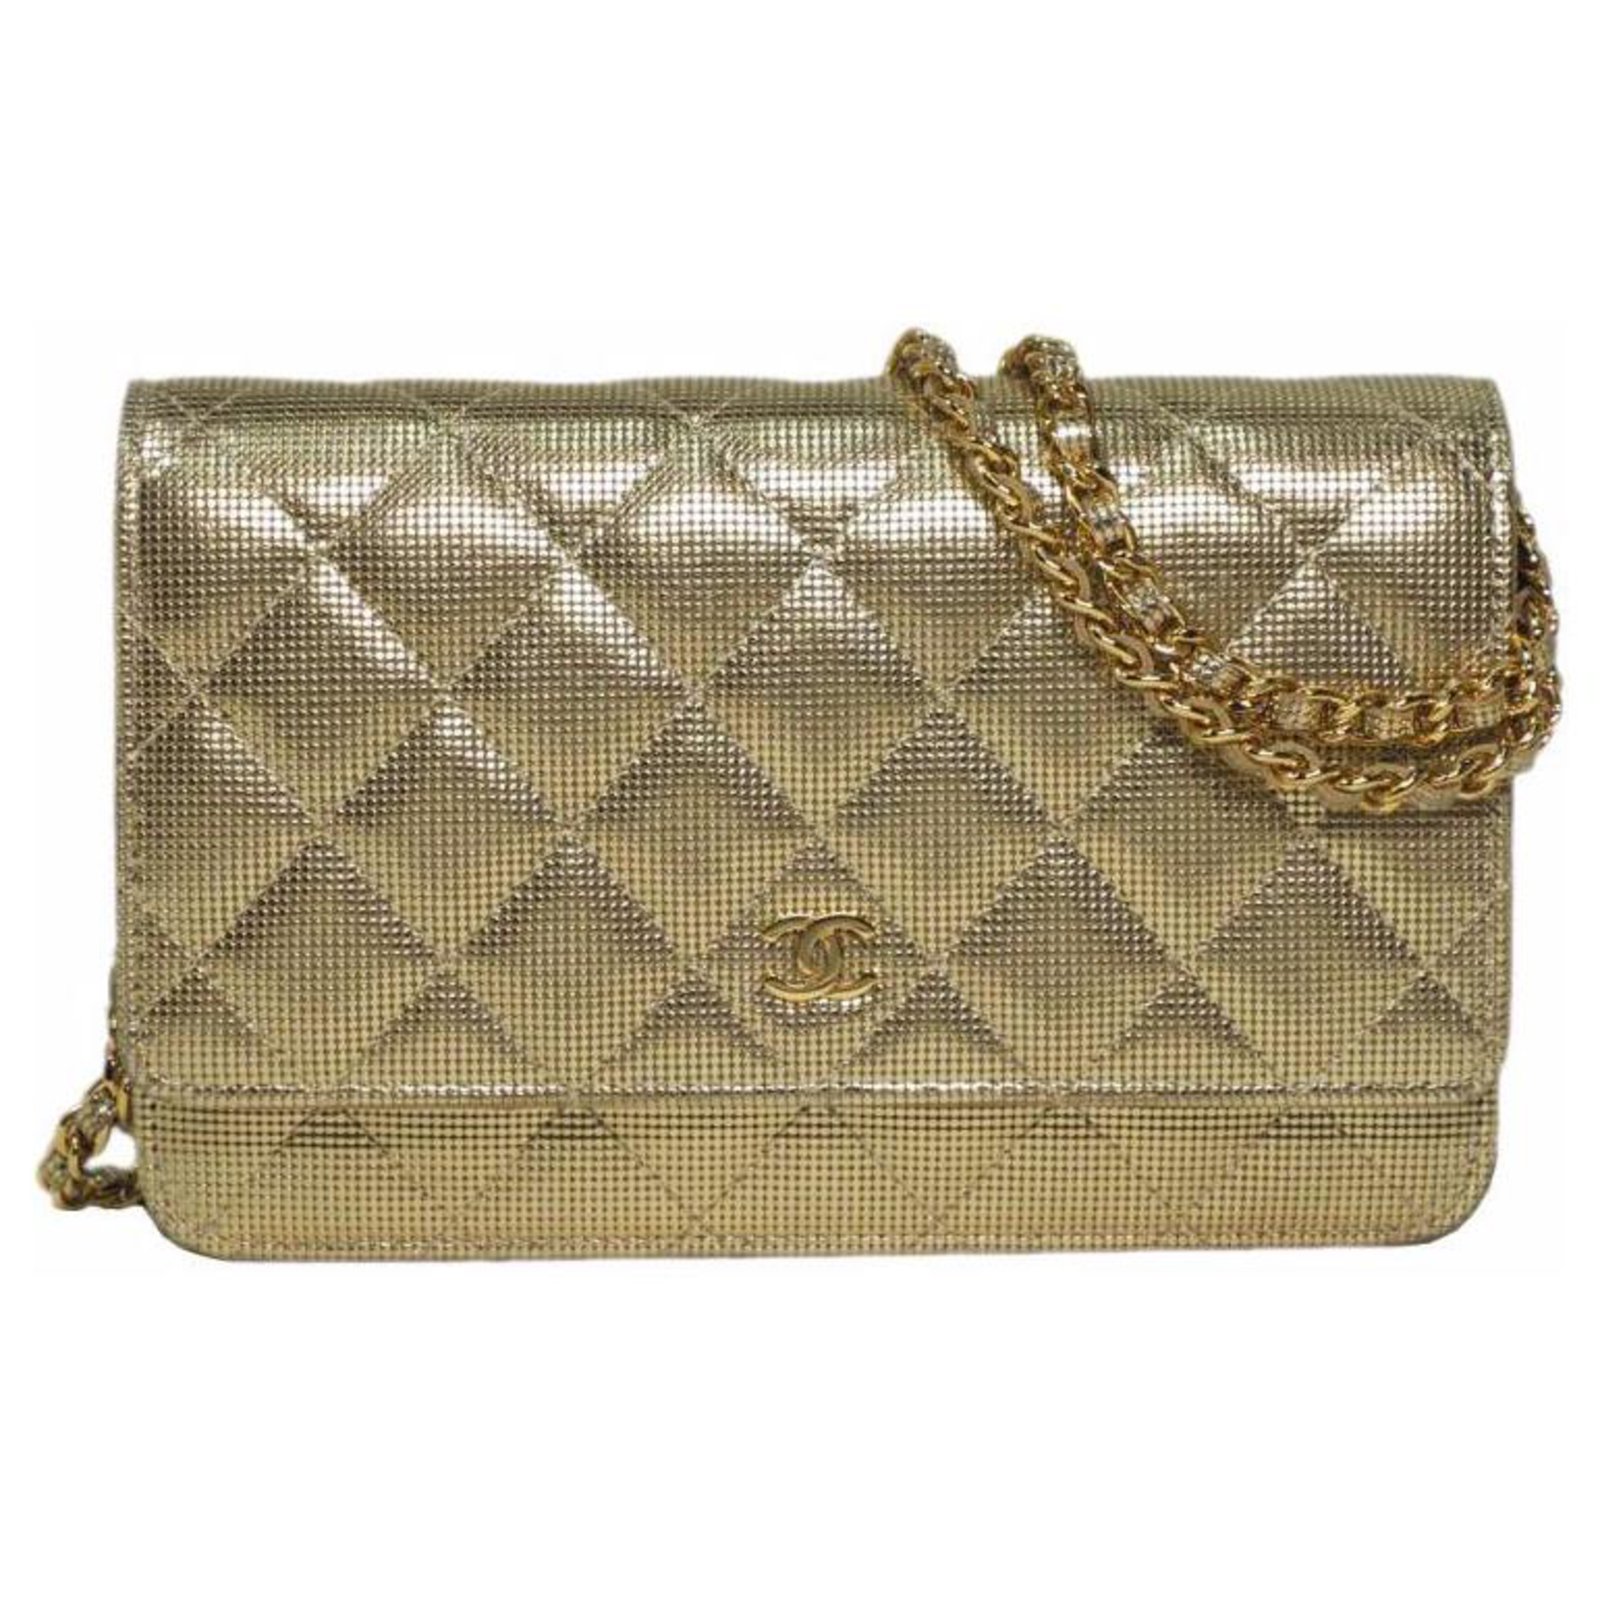 Chanel WOC Wallet on Chain Gold Metallic Pixel Effect Bag